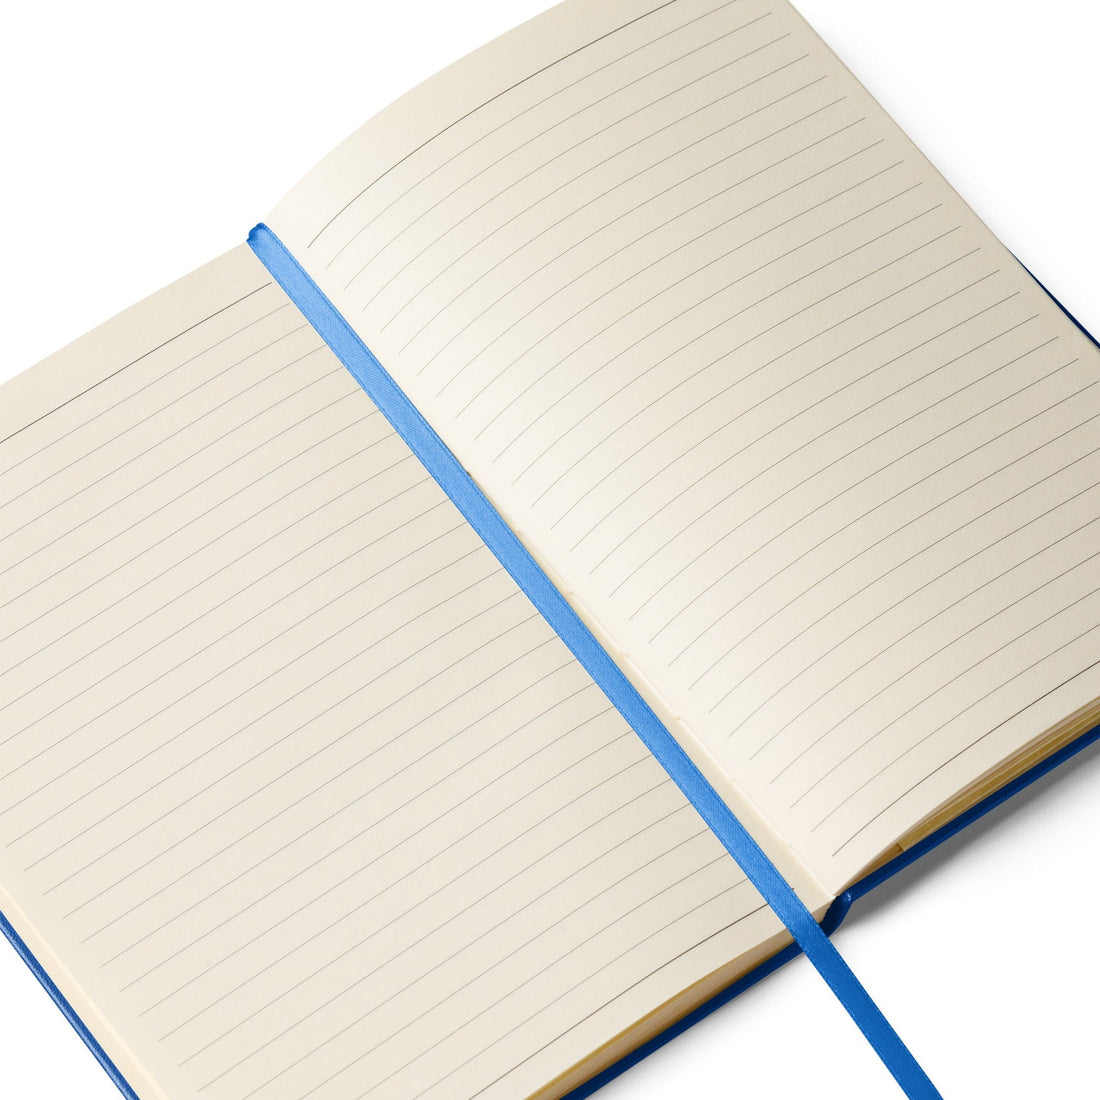  Journals Spark A Little Sunshine Hardcover Bound Journal Notebook - Blue